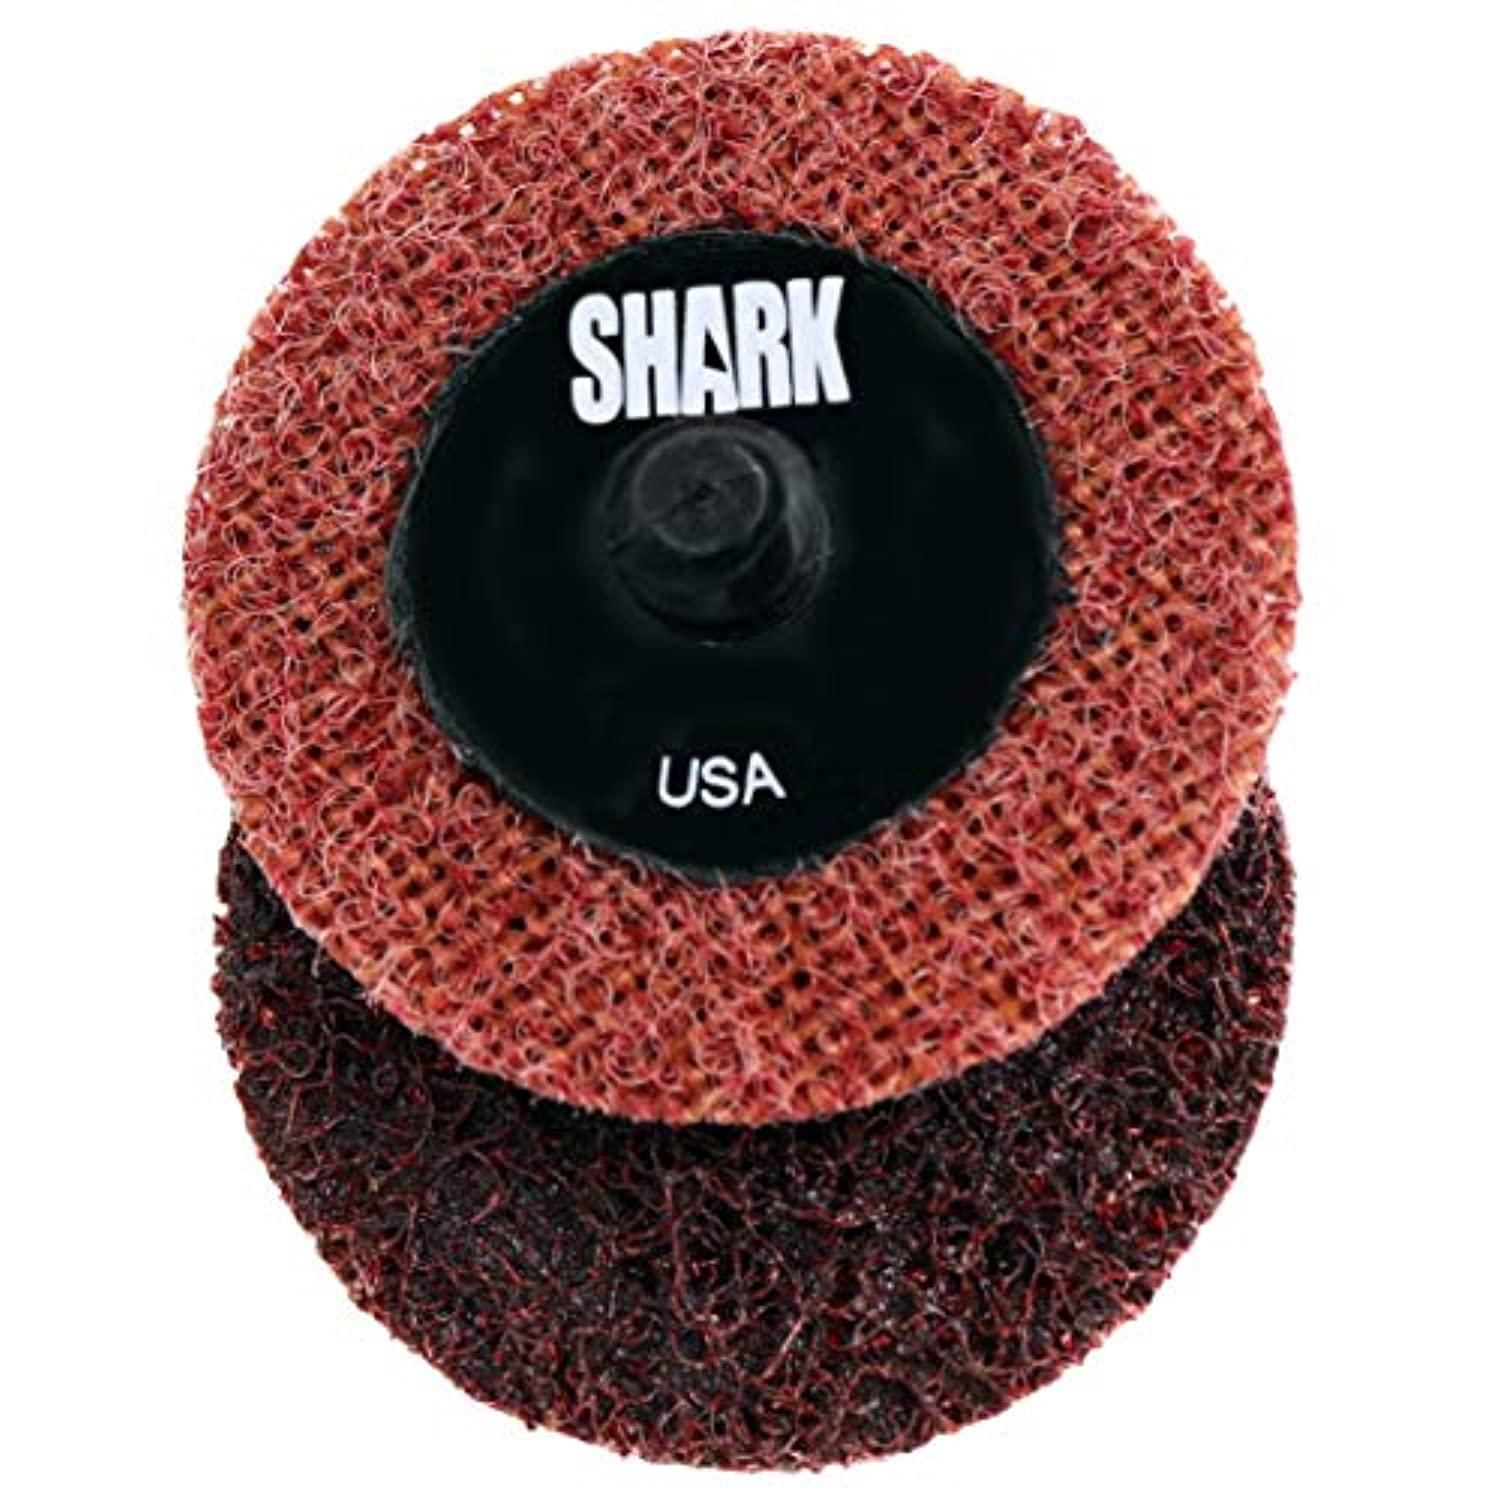 shark industries pn-13018 25-pack burgundy/medium quick change surface conditioning discs, 2? diameter - medium grit for sand